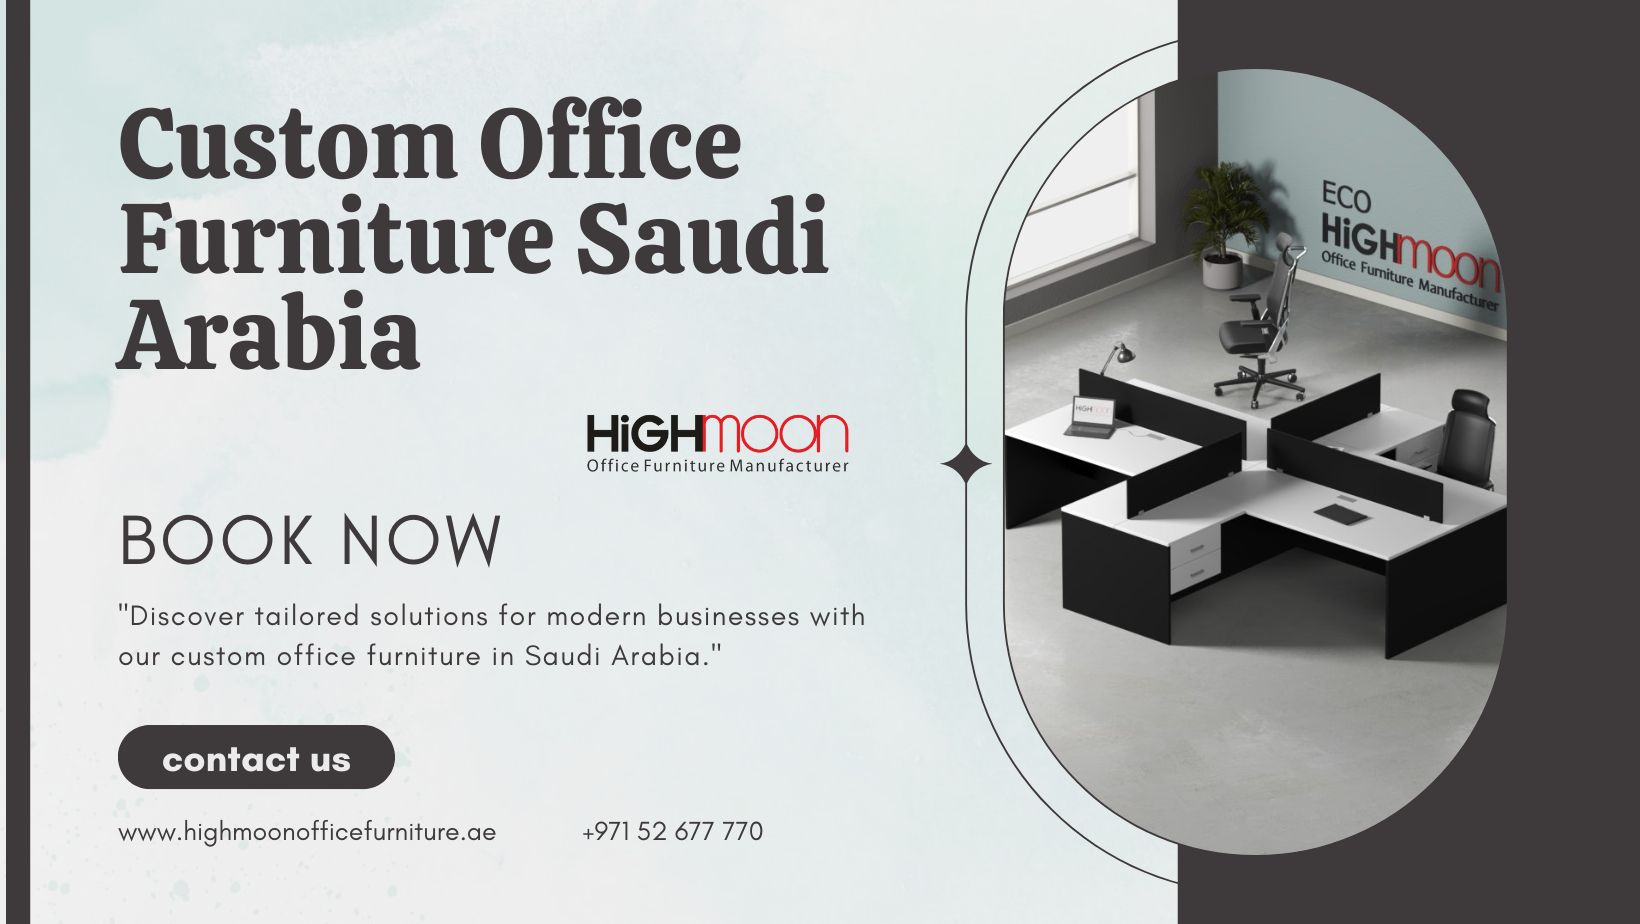 Custom Office Furniture Shop in Saudi Arabia